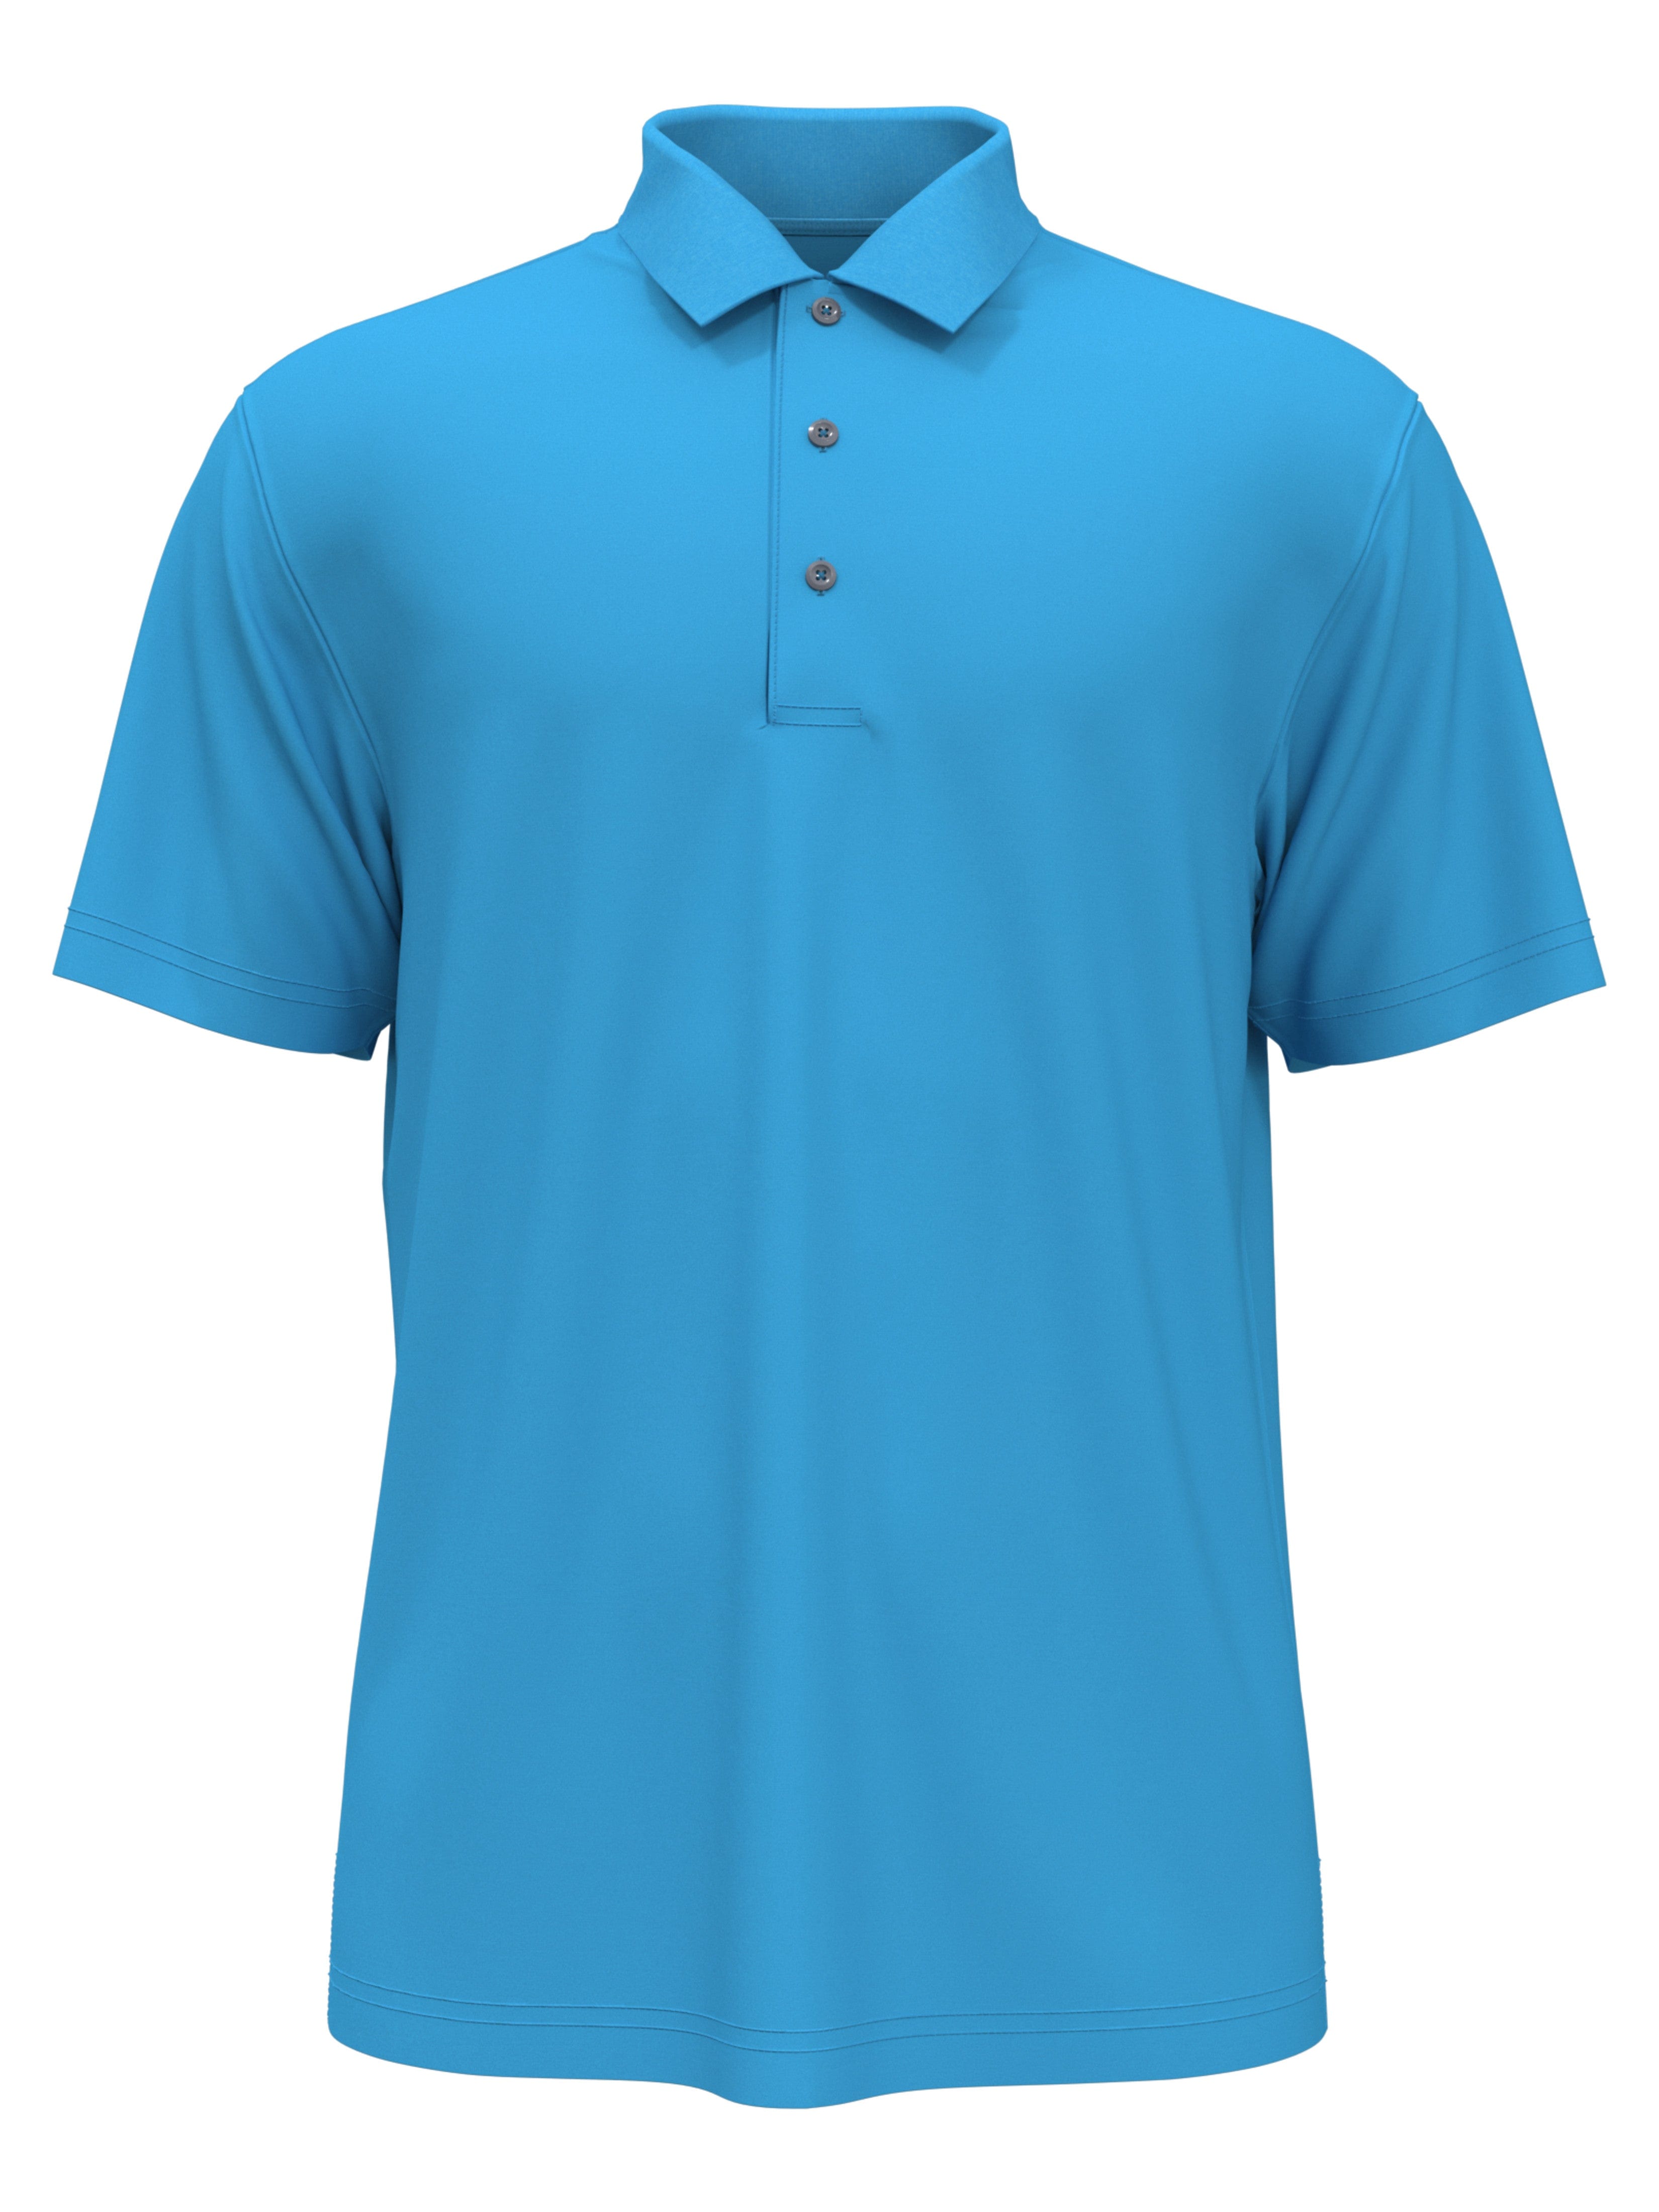 PGA TOUR Apparel Boys AirFlux™ Solid Mesh Golf Polo Shirt, Size Small, Blue Blossom, 100% Polyester | Golf Apparel Shop